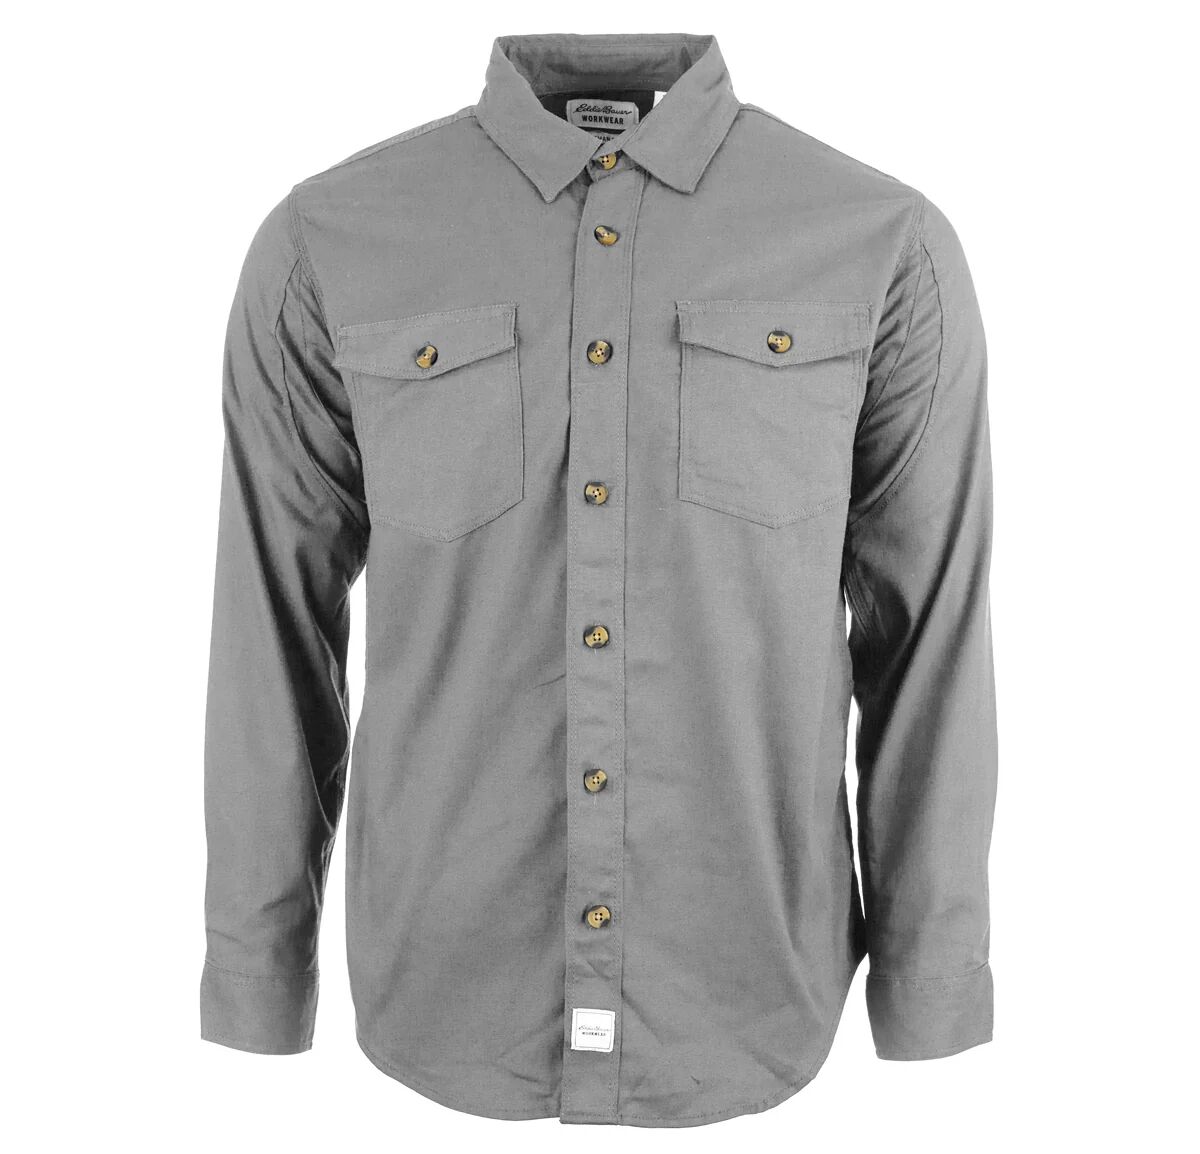 Eddie Bauer Men's License to Will Long Sleeve Shirt Grey S